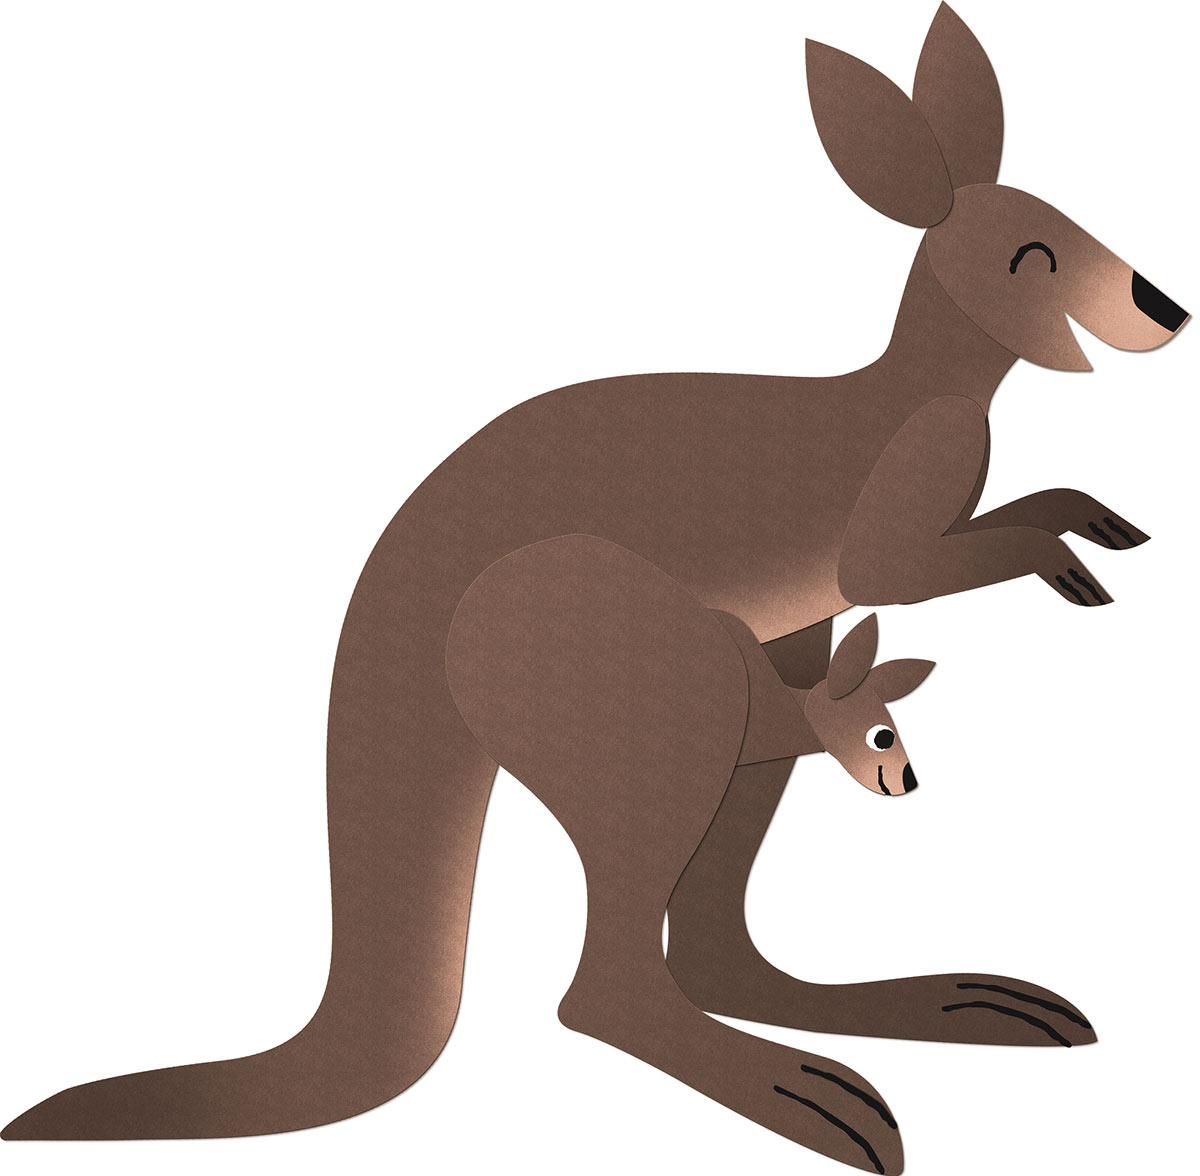 Digital illustration of a kangaroo. - click to view larger image